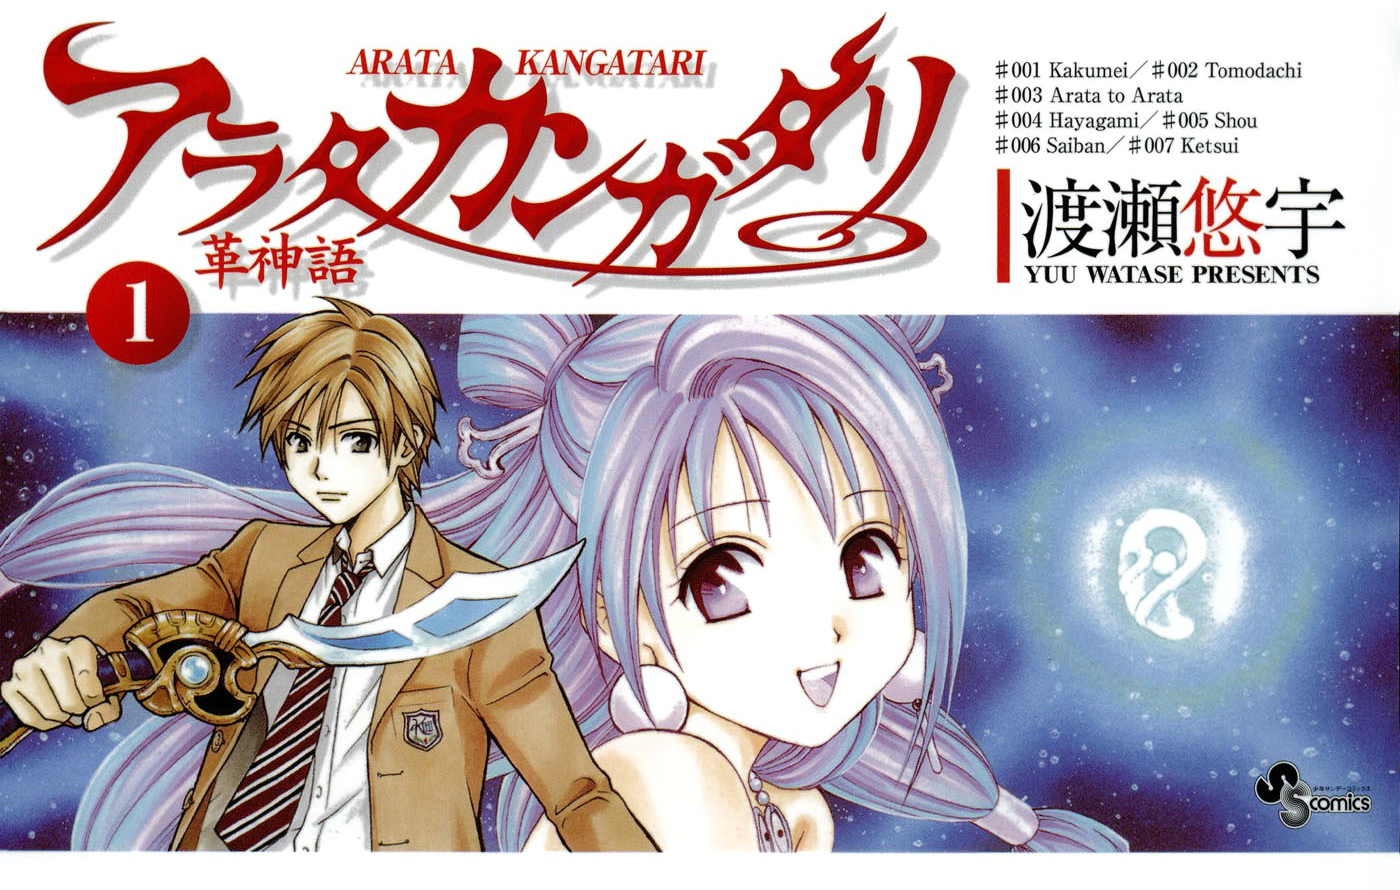 Manga Arata Kangatari Wiki Fandom